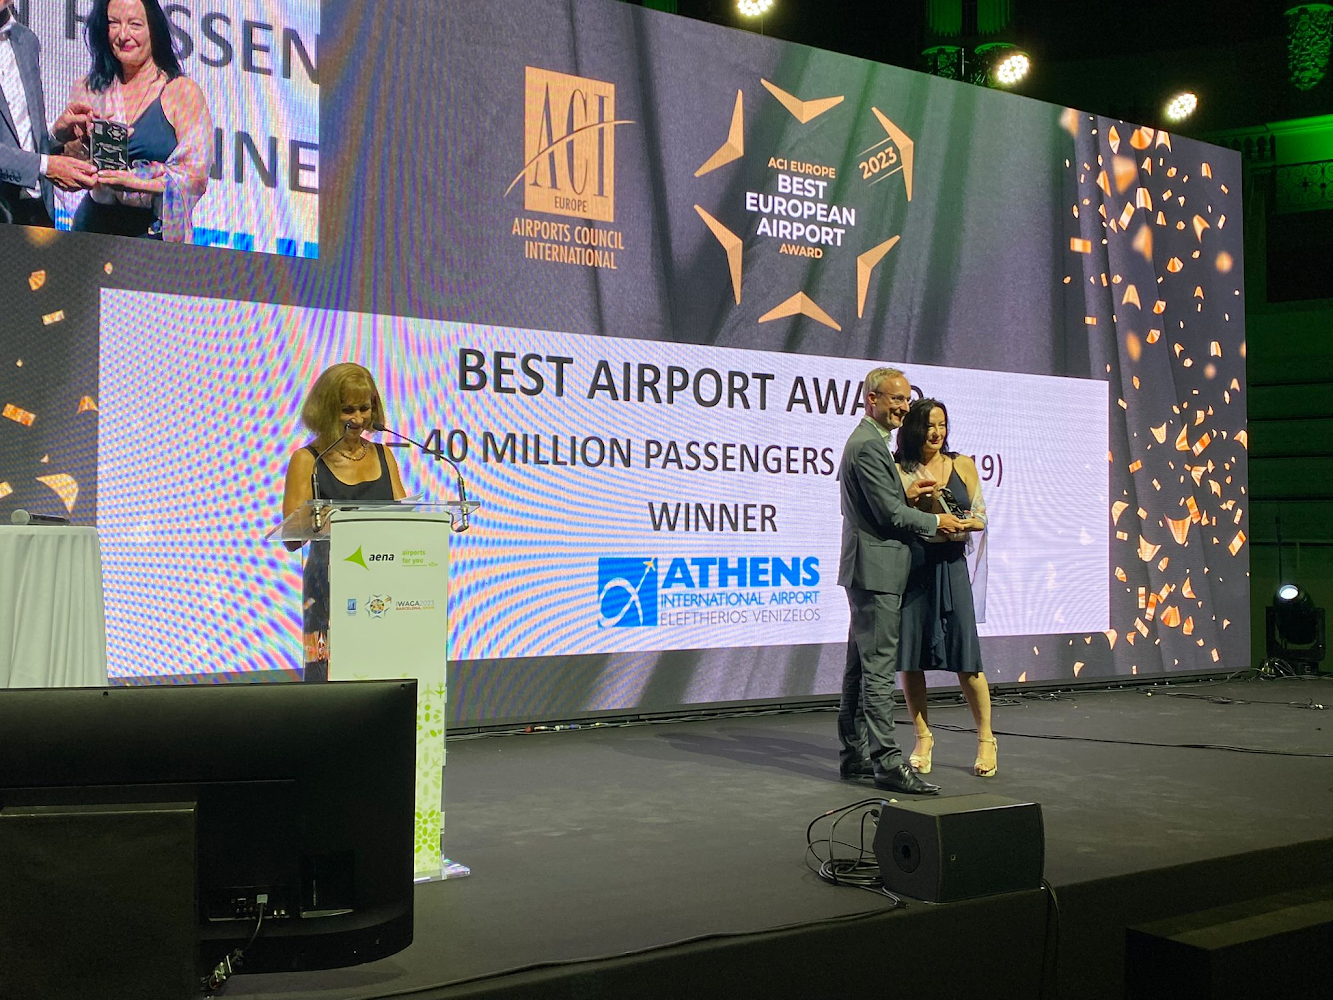  Best Airport Award